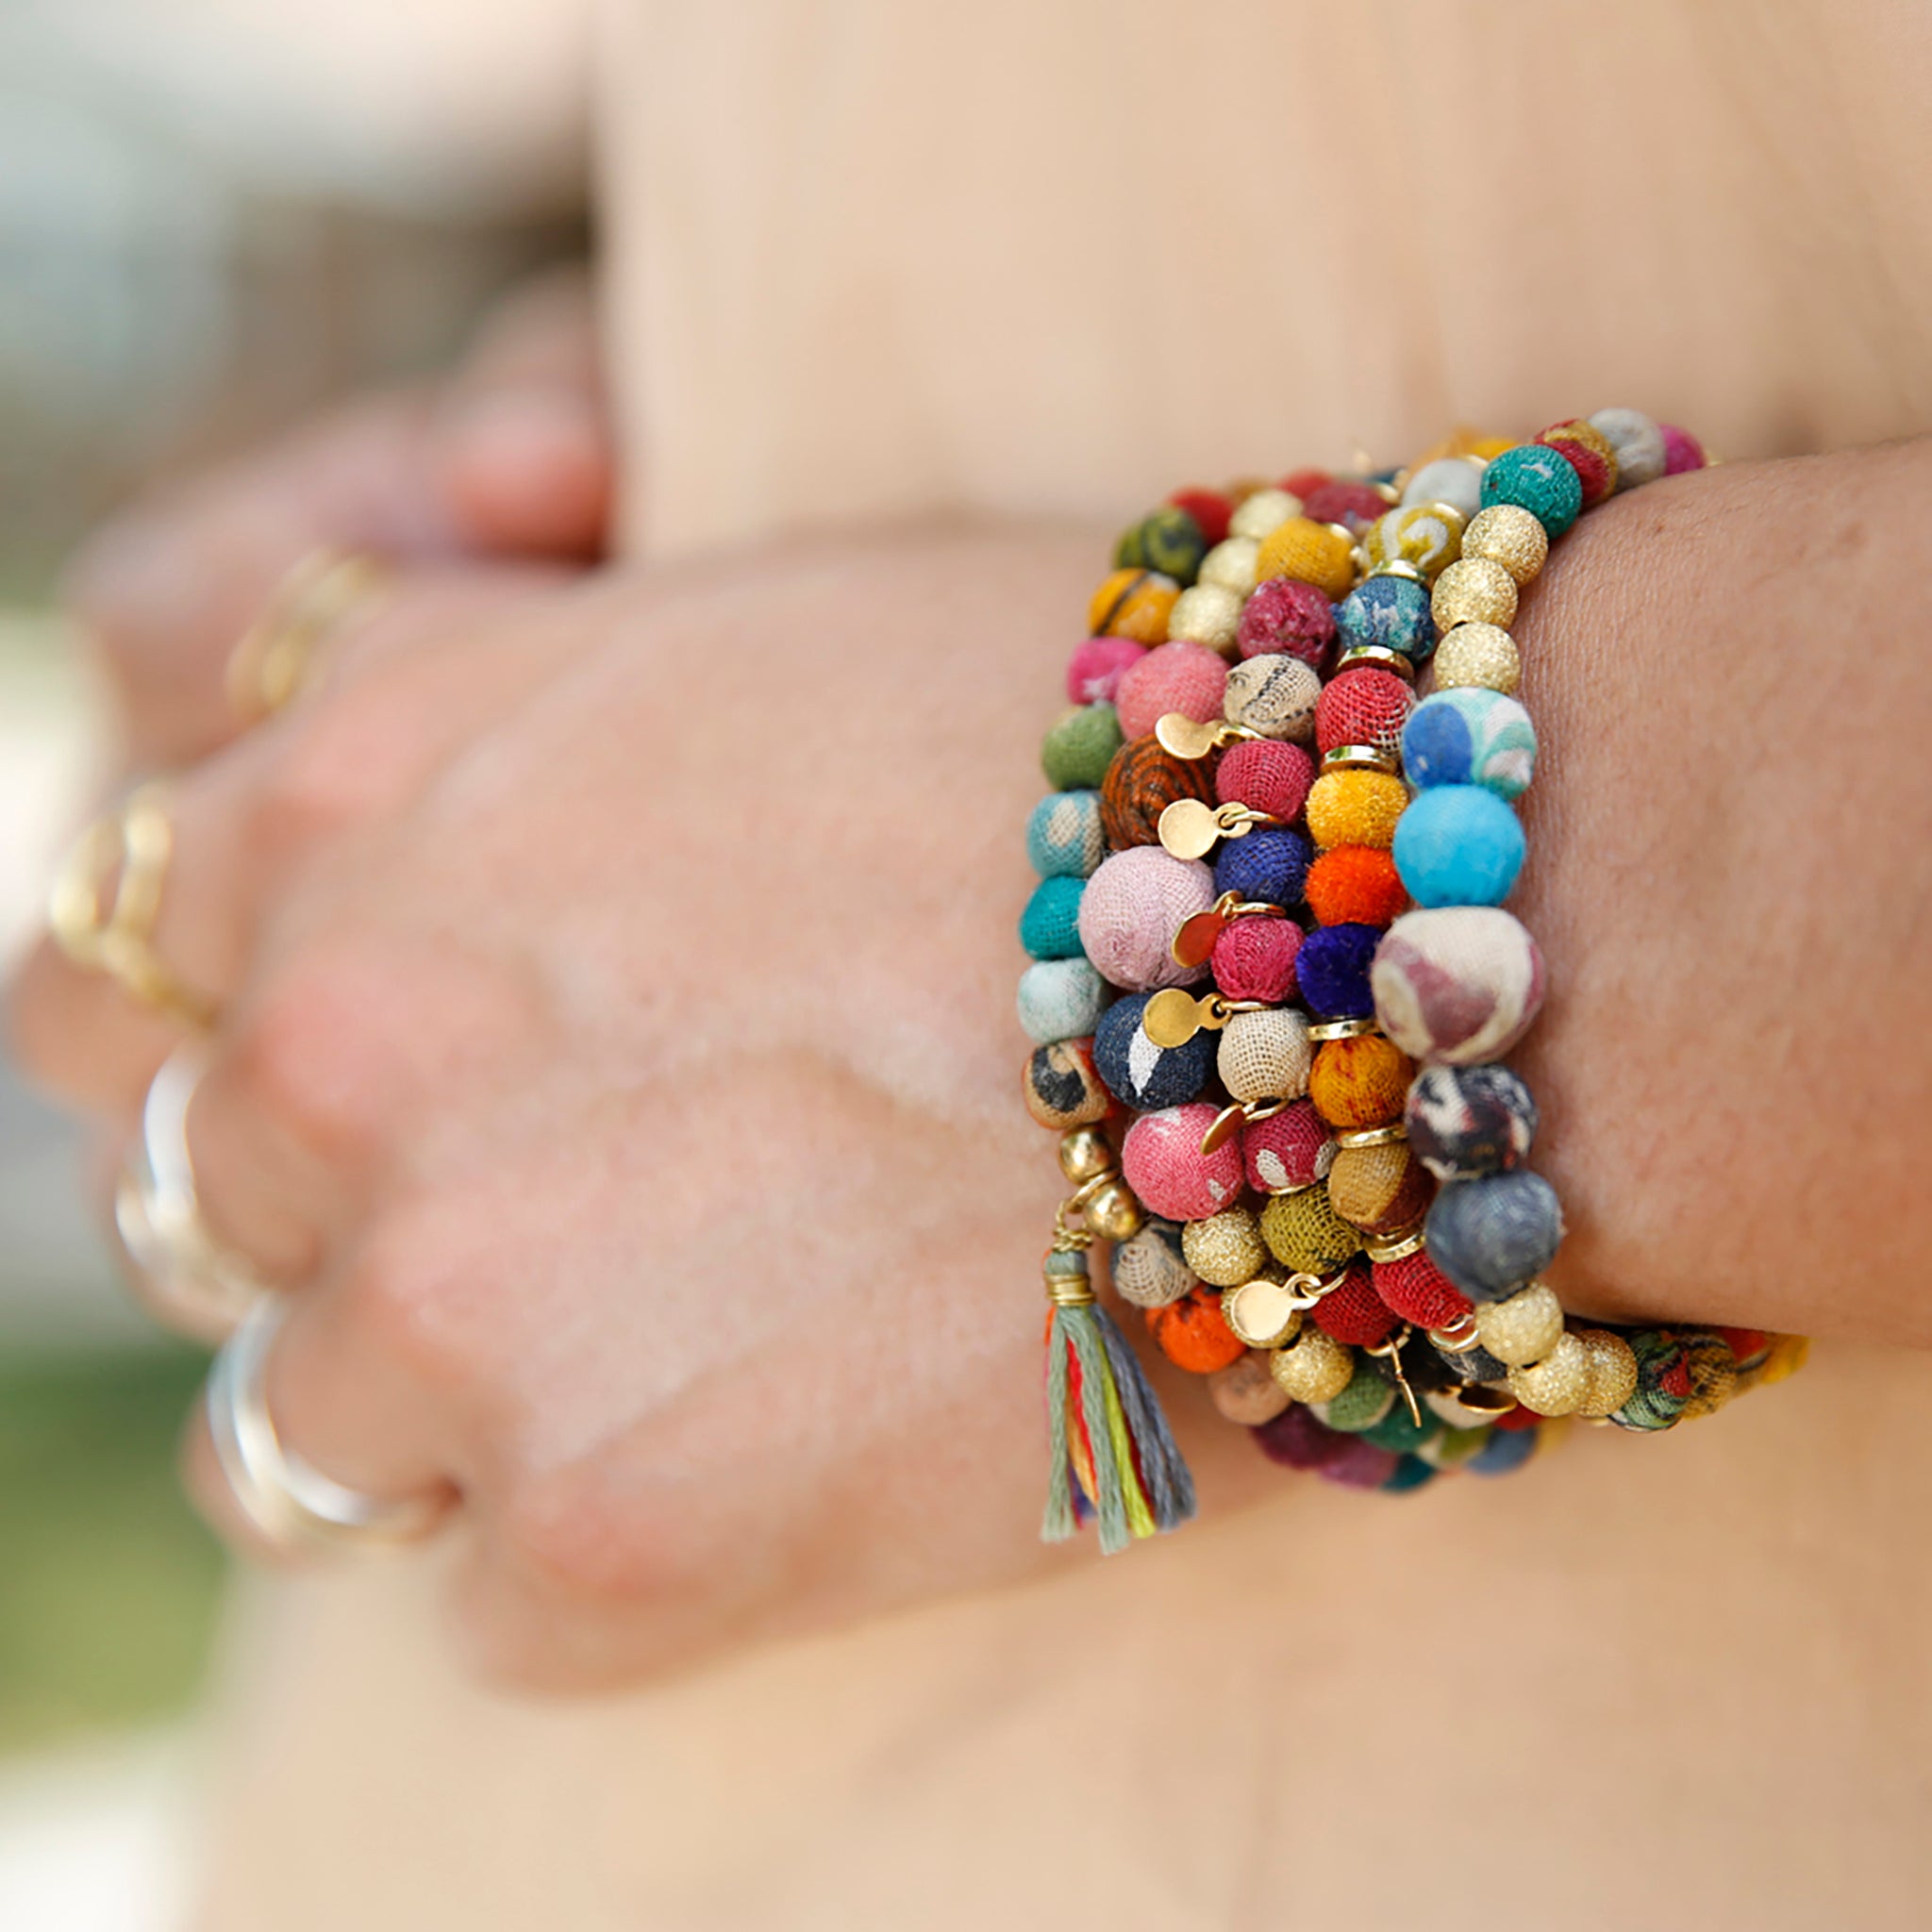 Five multicolored bracelets adorn a wrist.